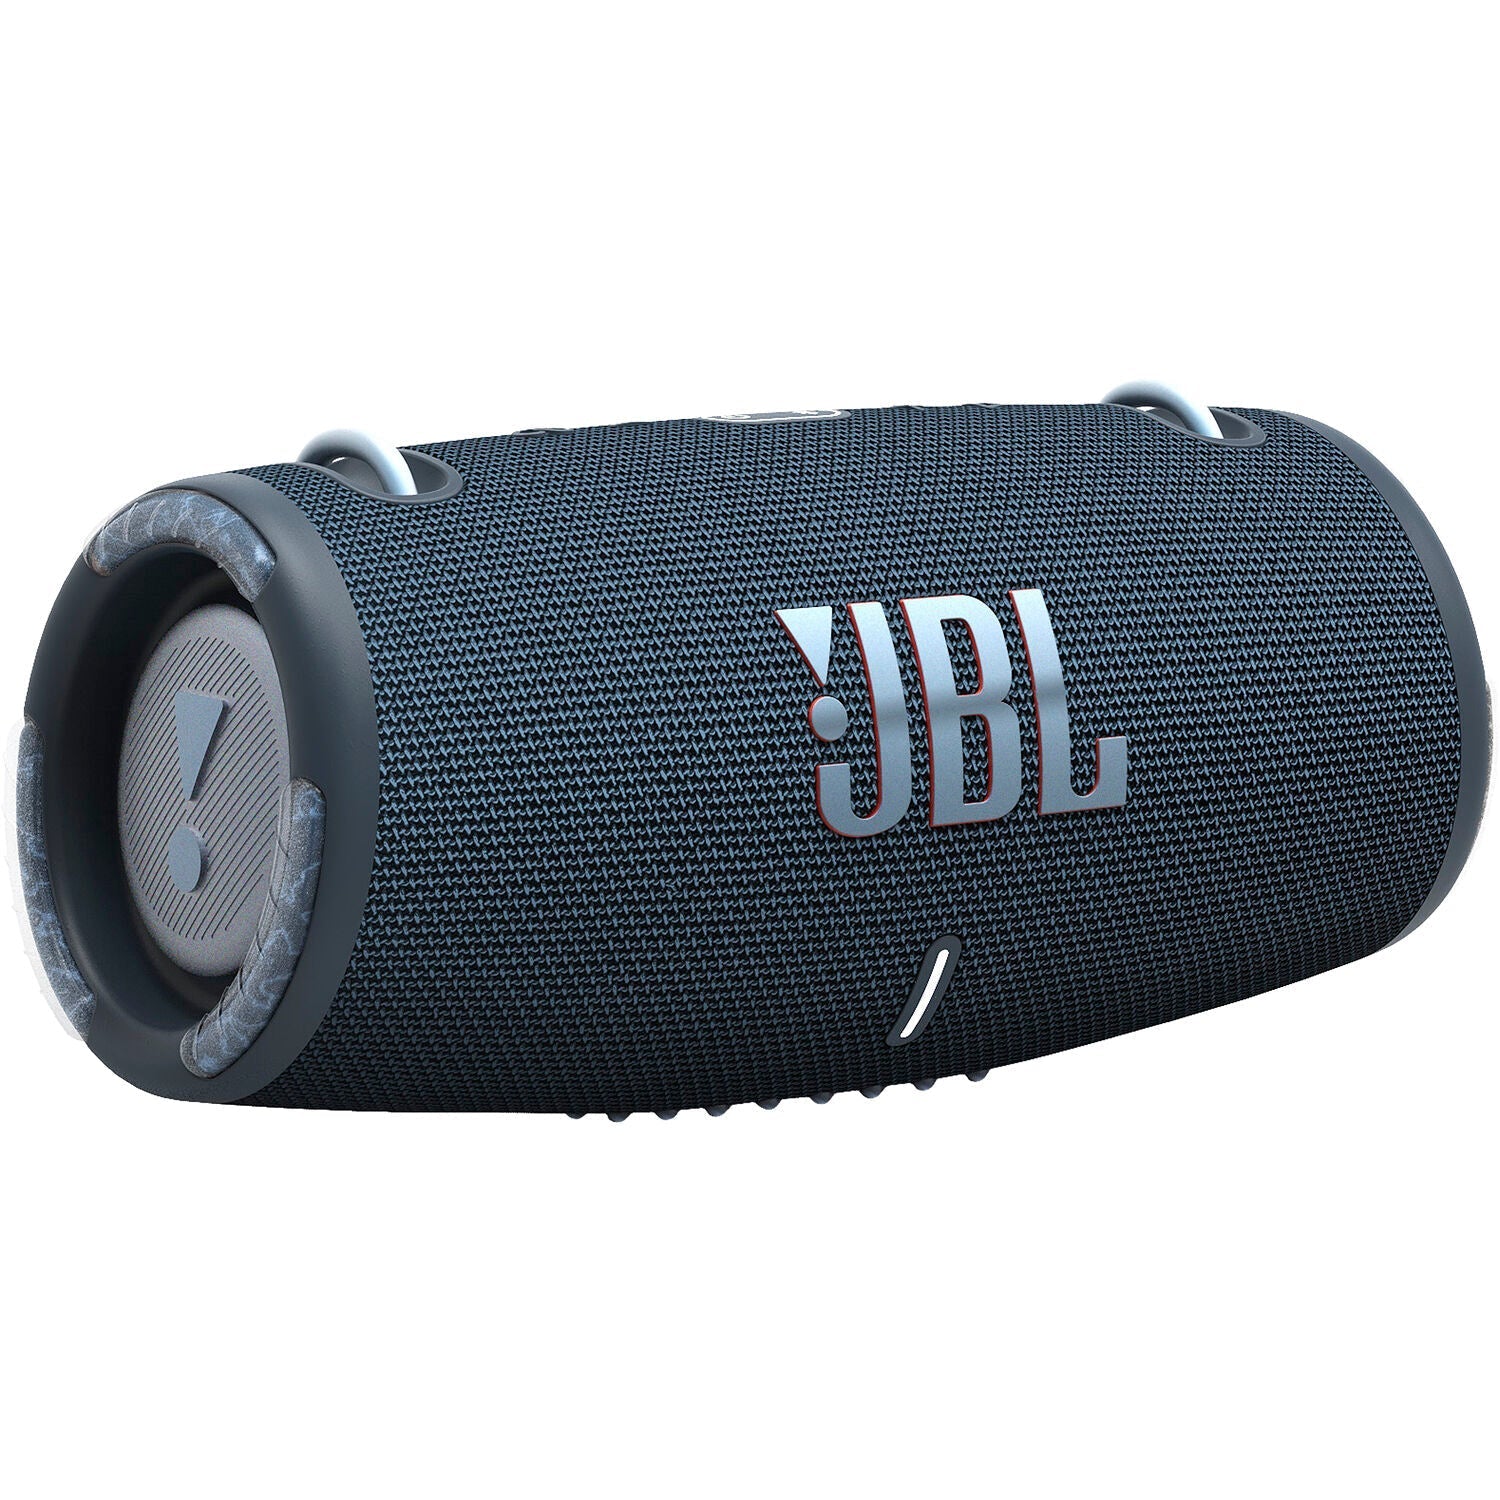 JBL JBLXTREME3BLUAM-Z Xtreme 3 Portable Waterproof Speaker Blue - Certified Refurbished